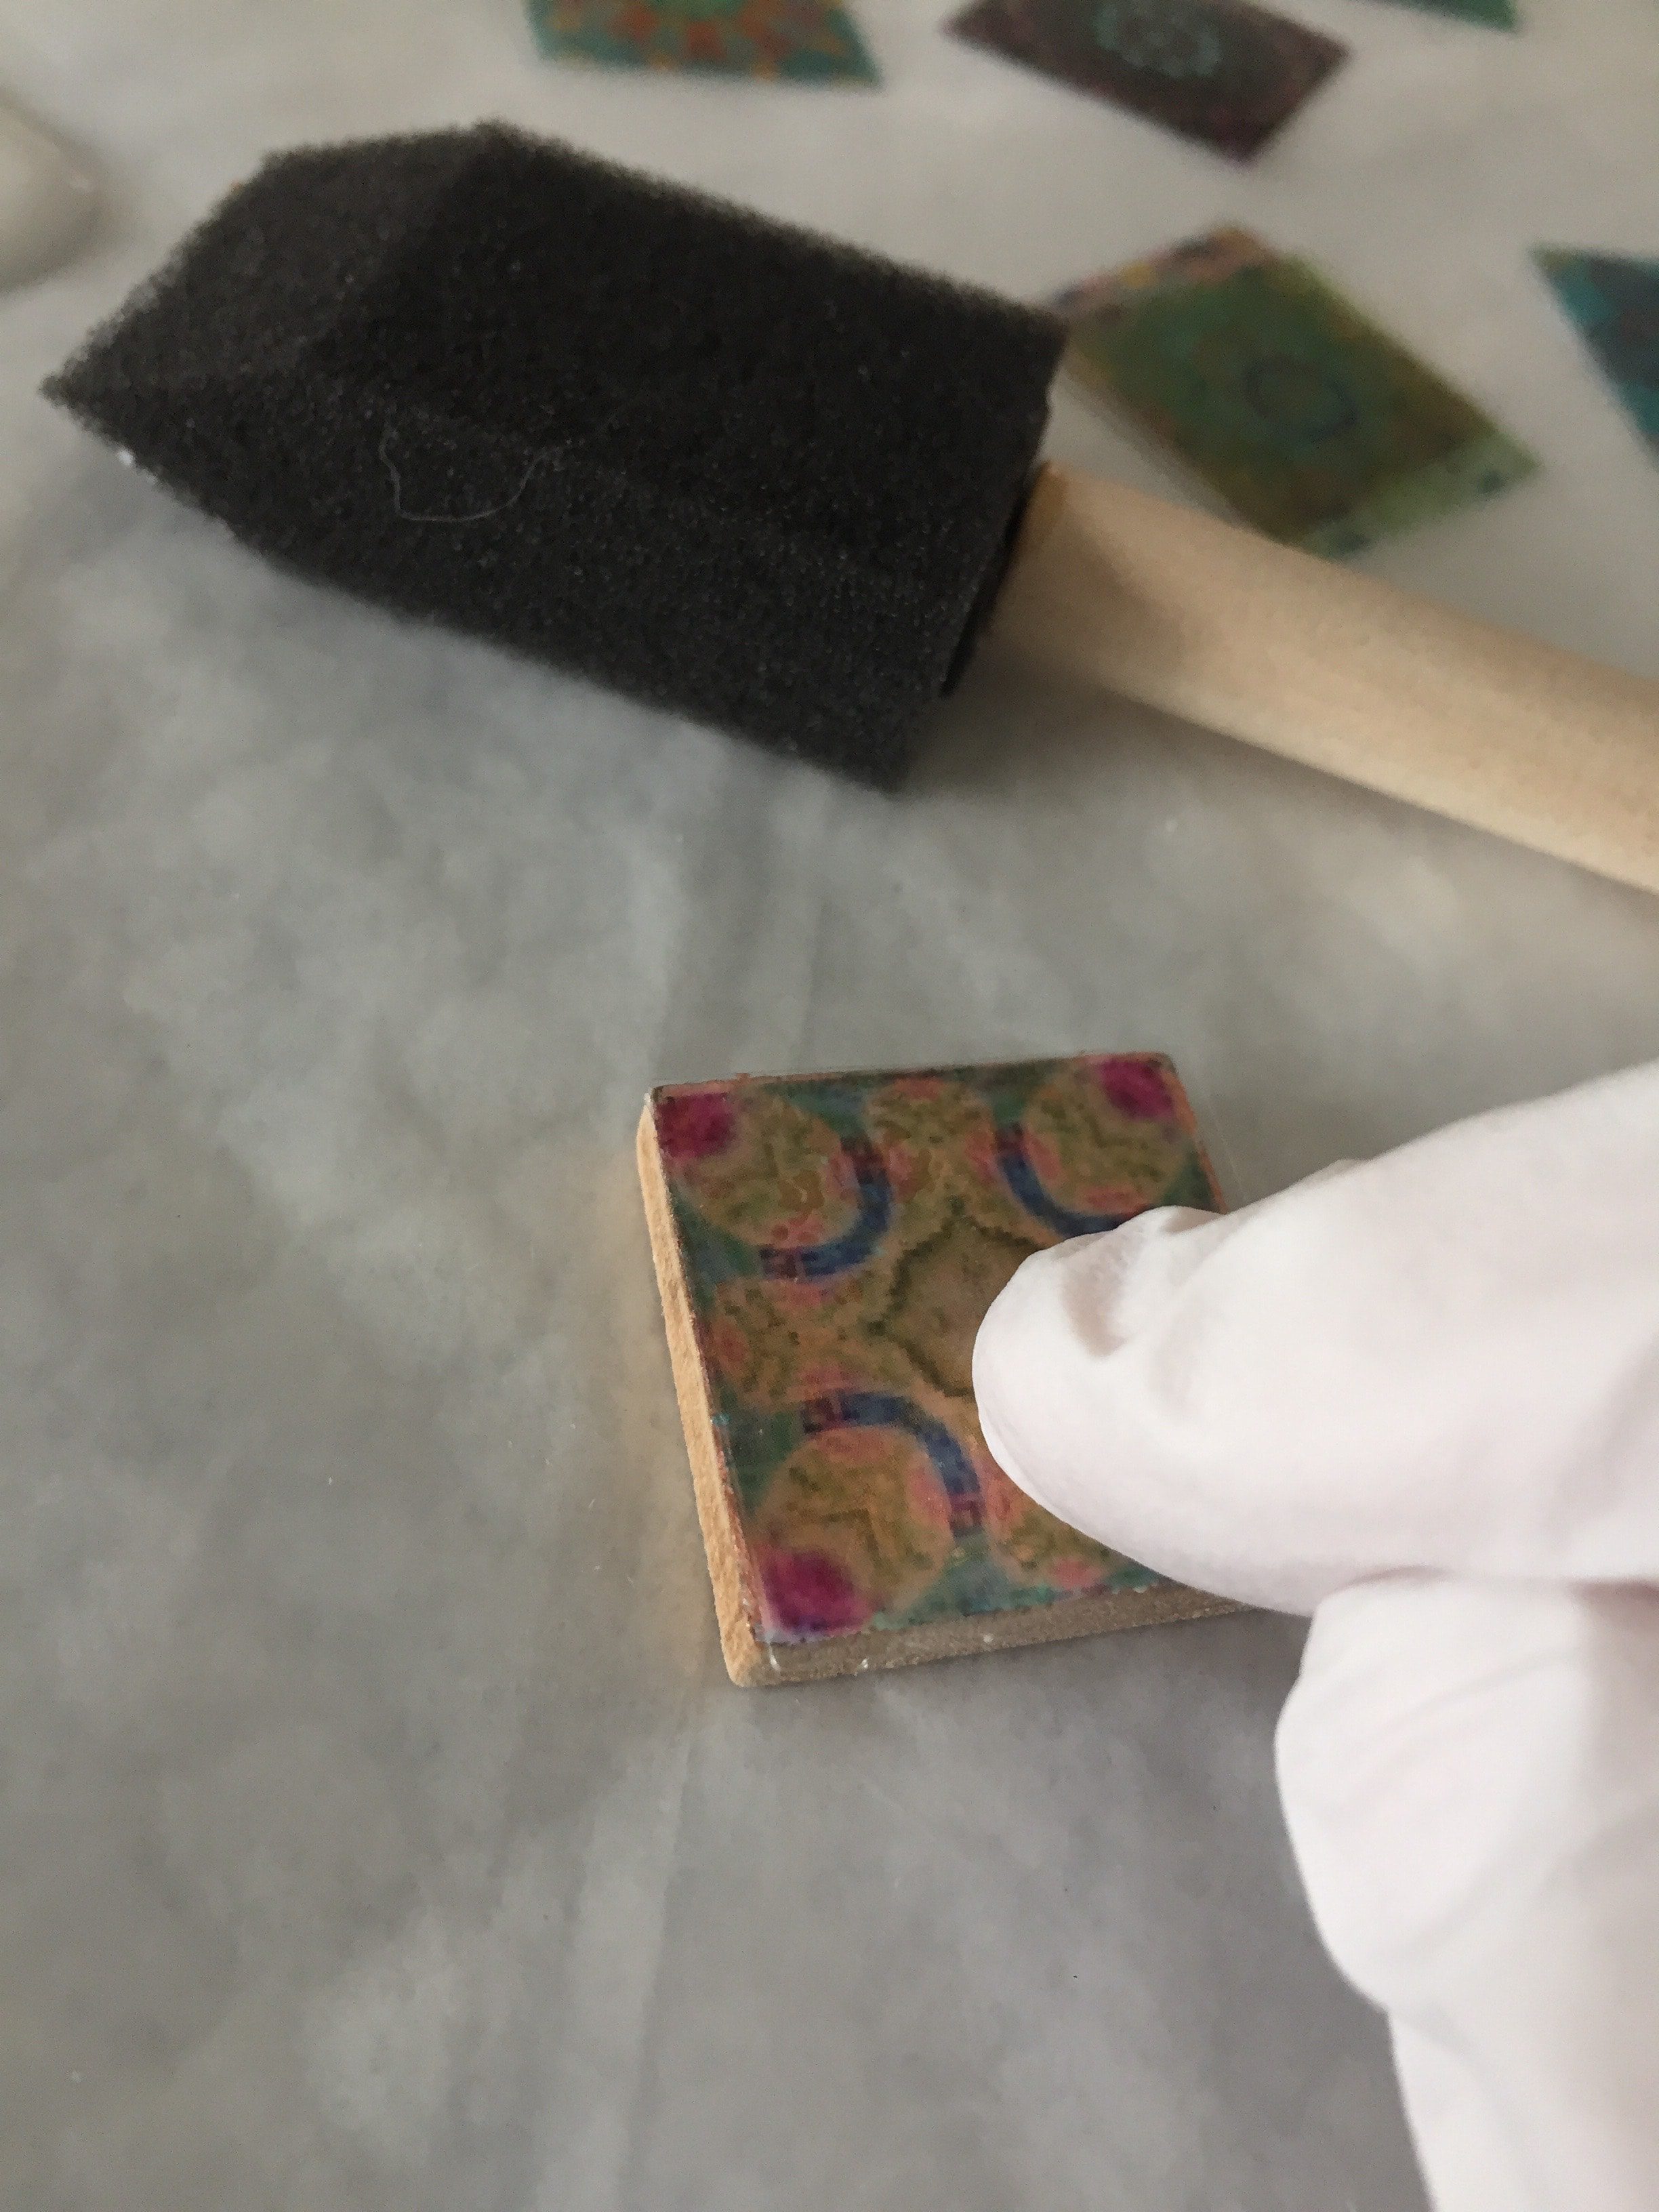 affixing mandala transparency to wooden tile